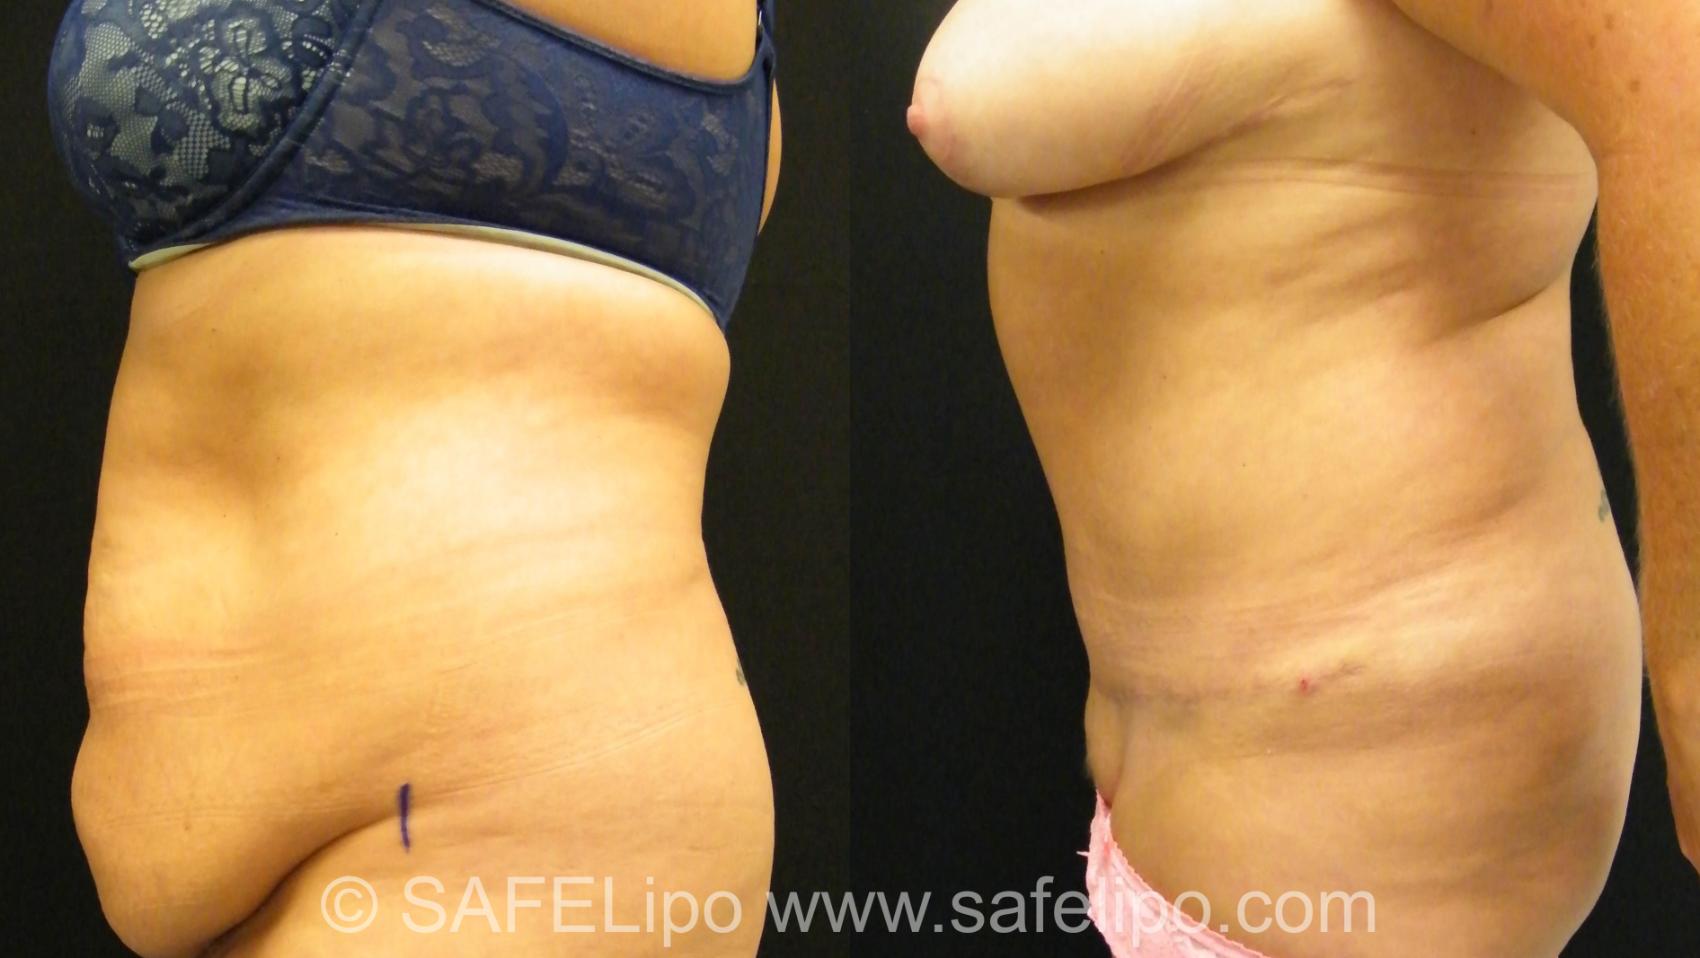 SAFELipoHD® Case 394 Before & After View #3 | SAFELipo®